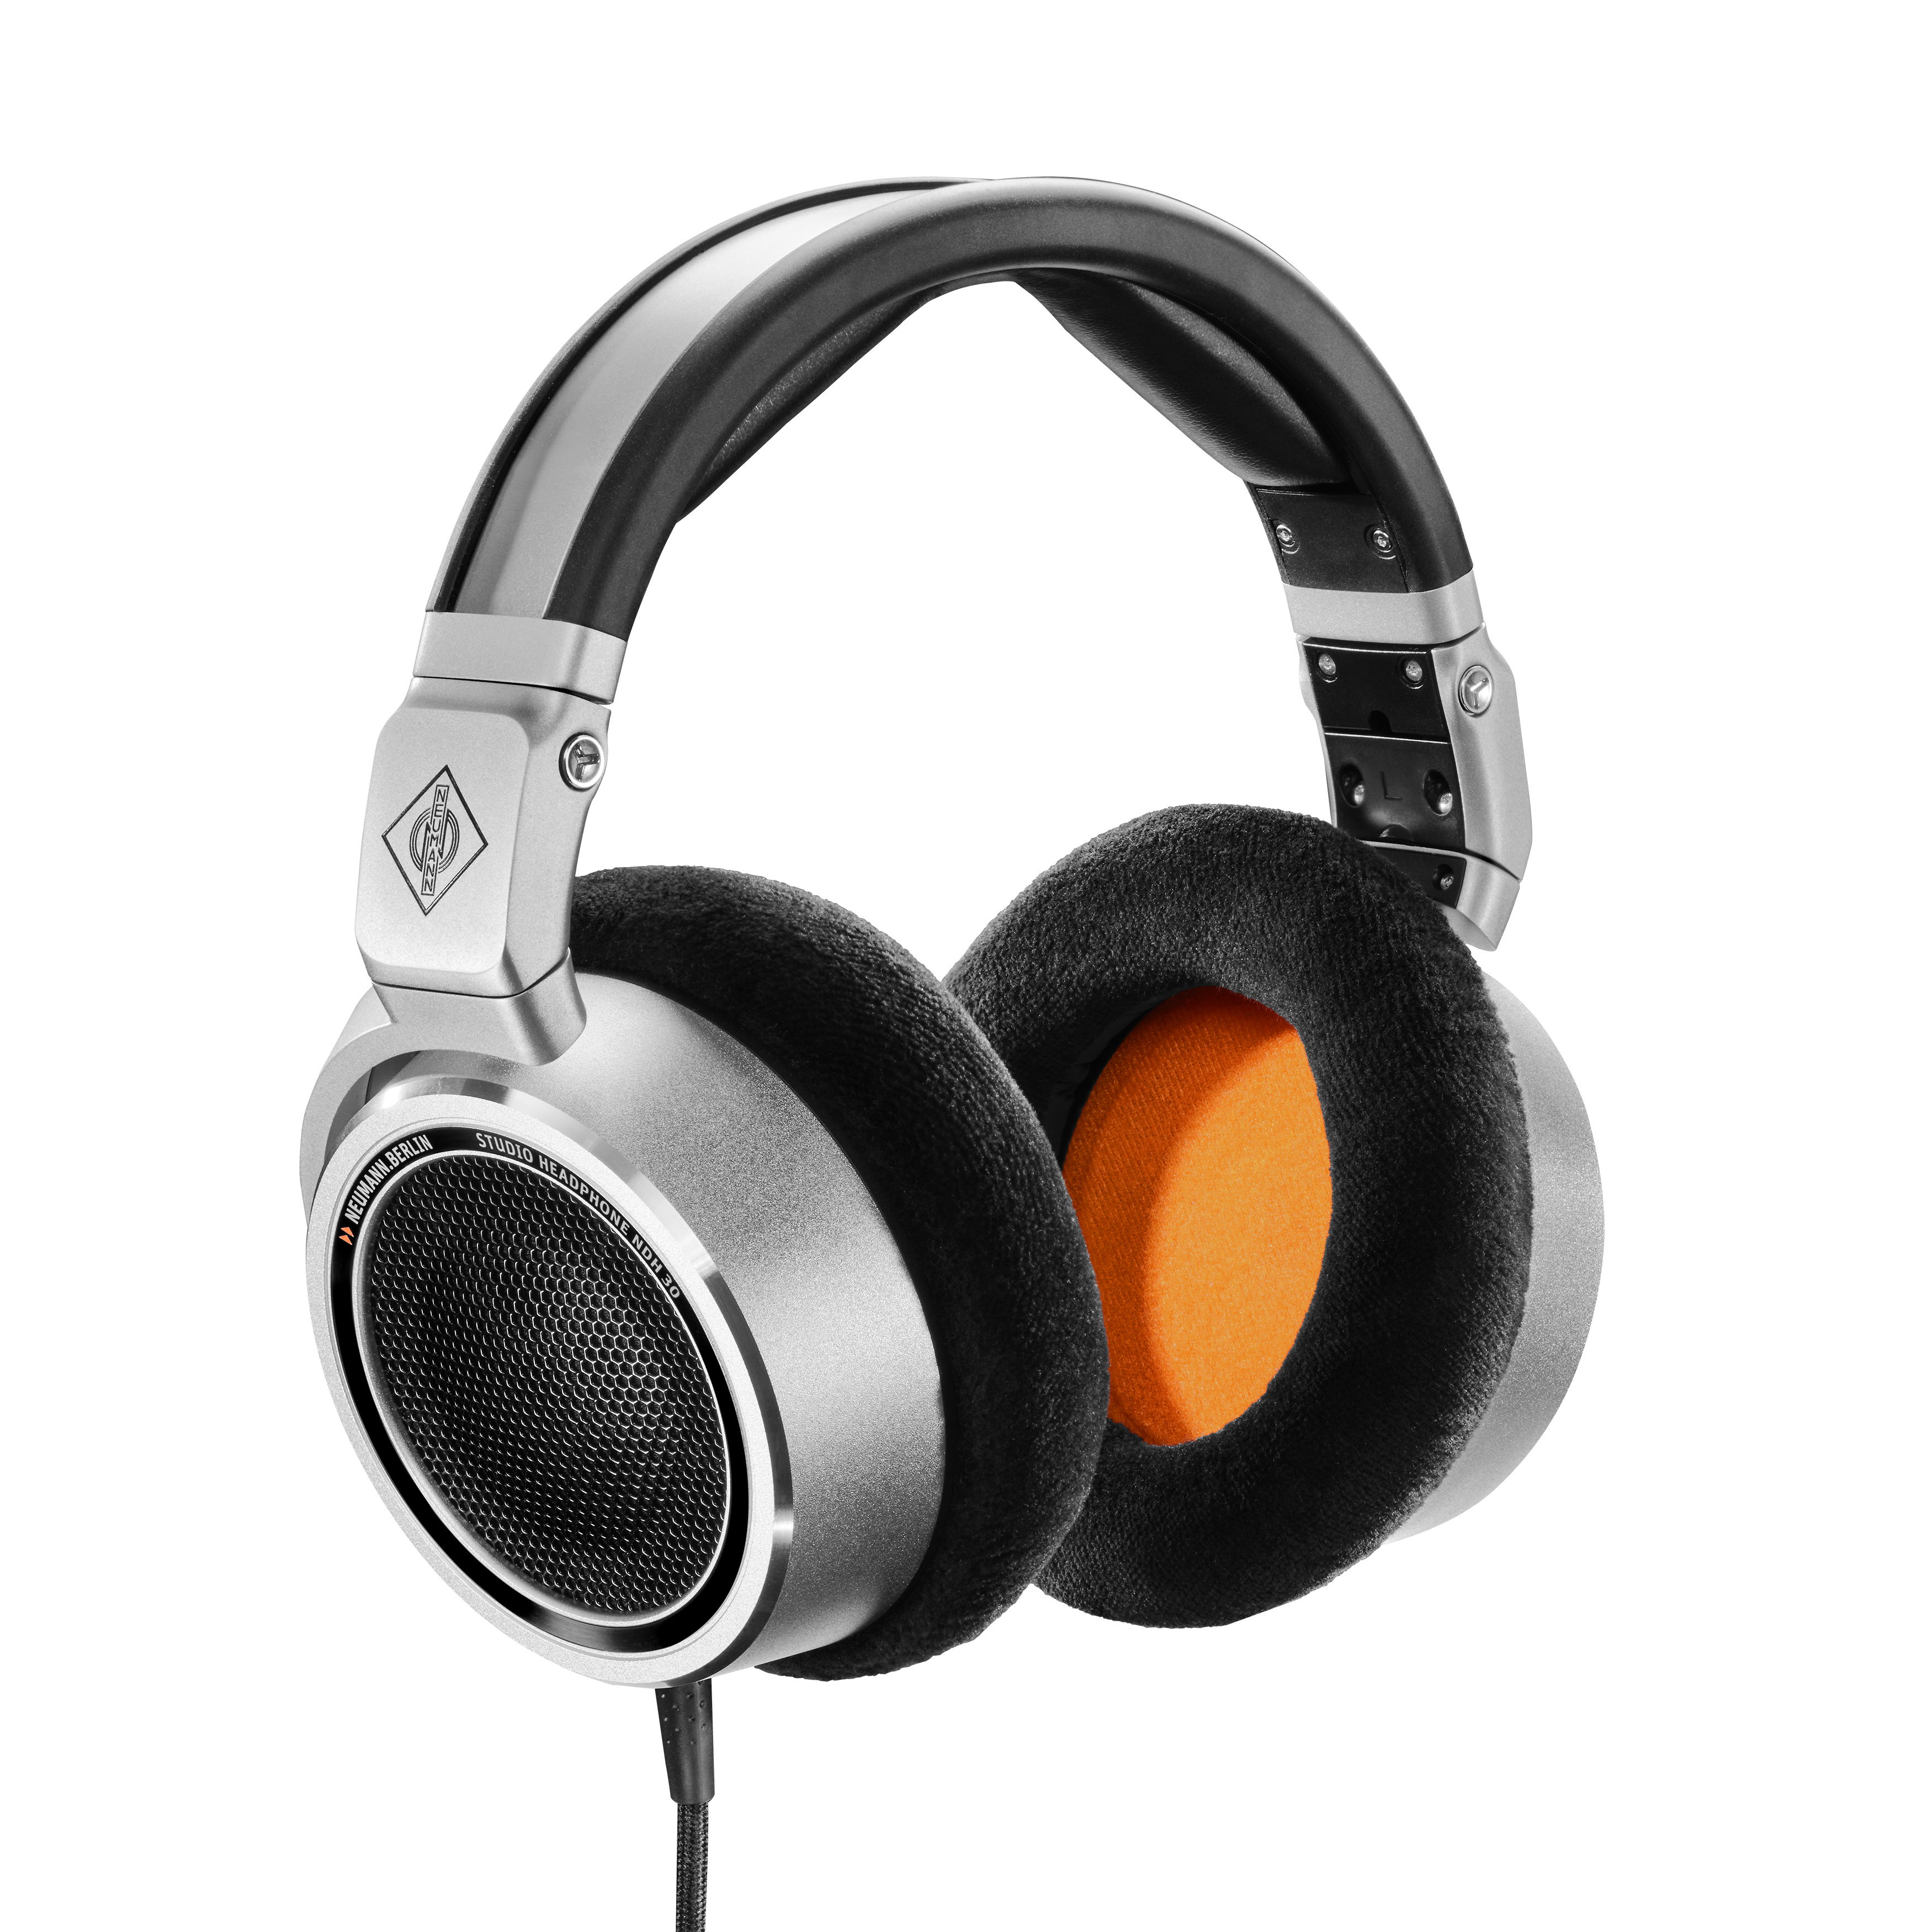 The Neumann NDH 30 open-back studio headphones